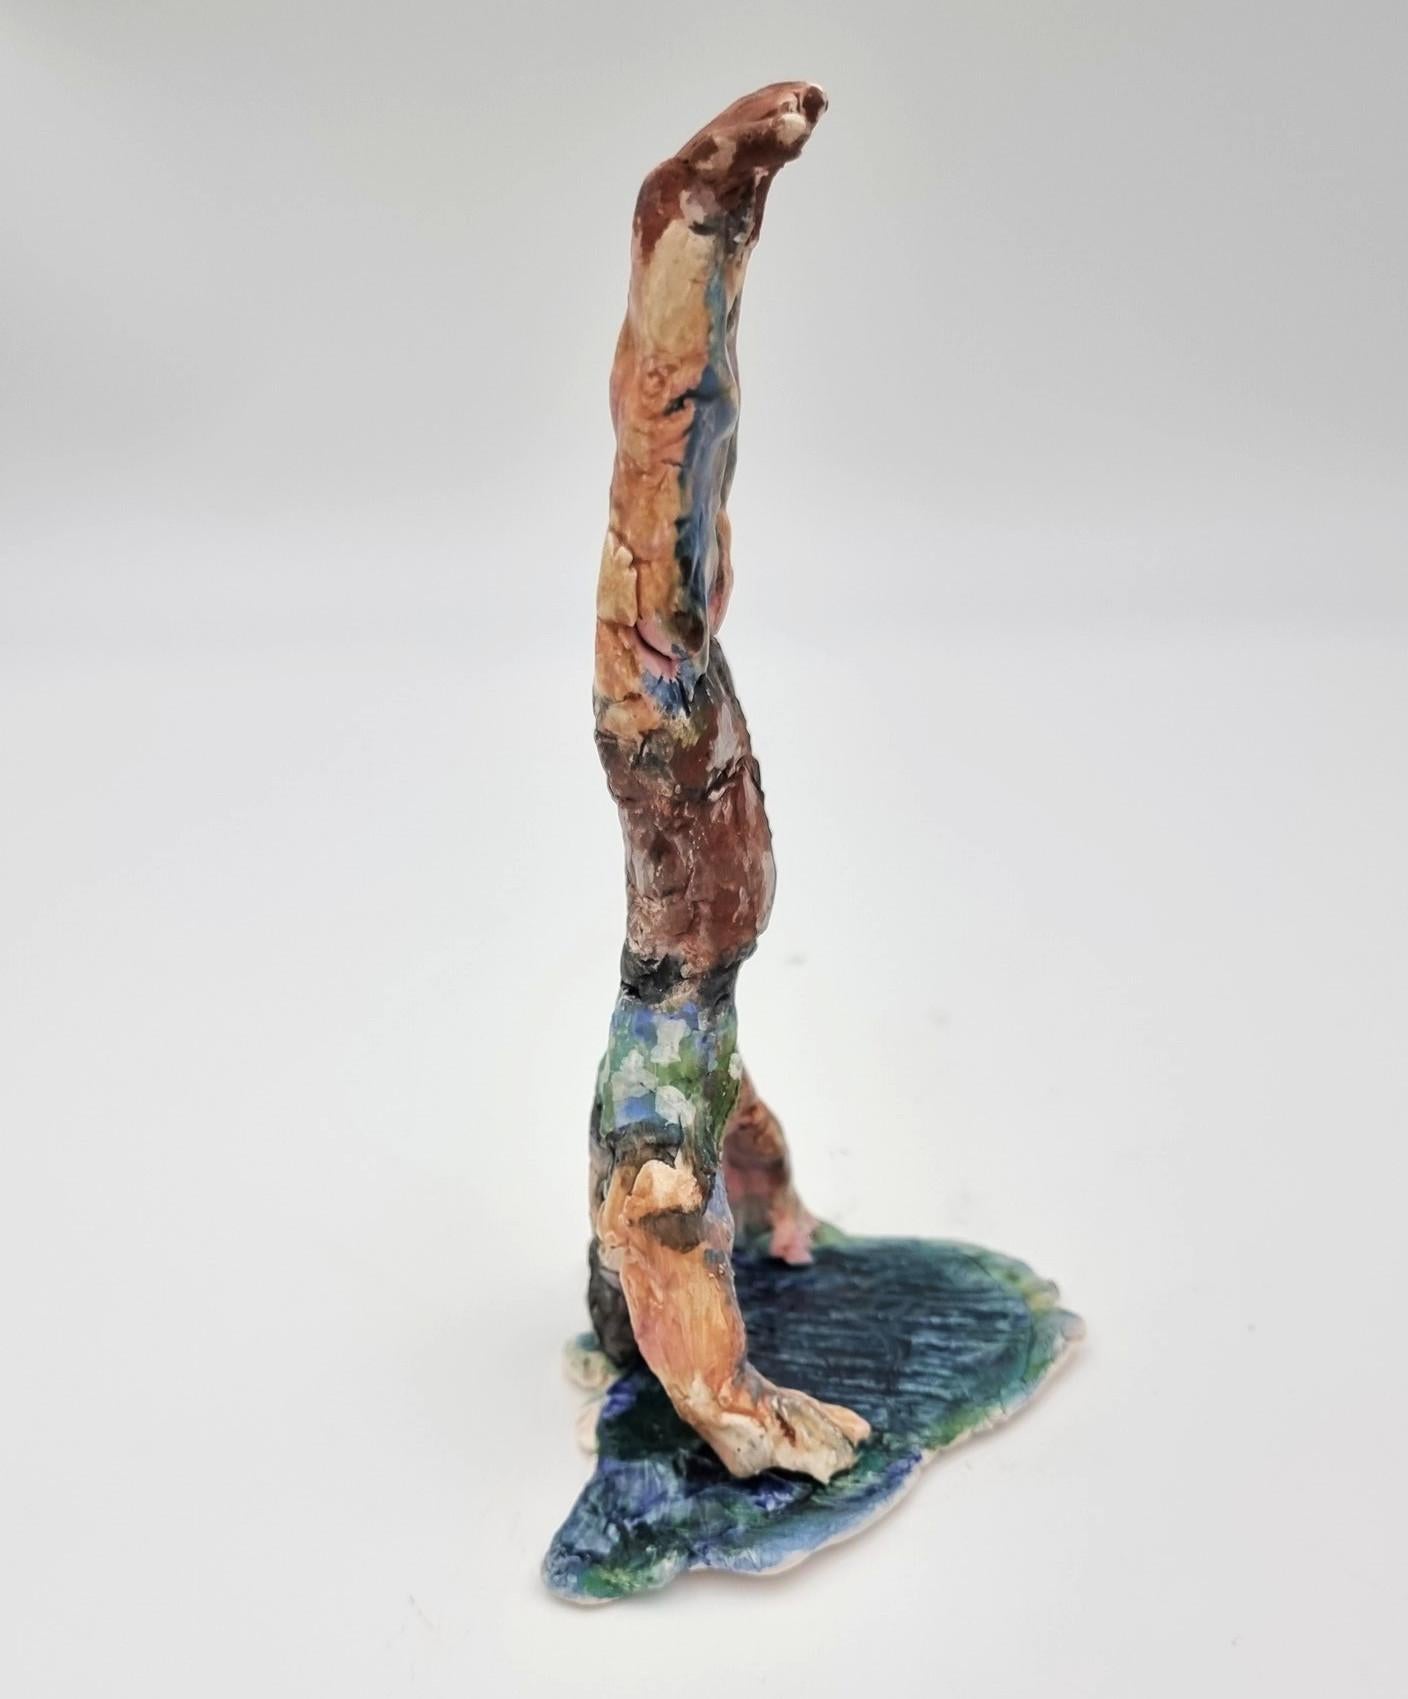 Headstand Acrobat (Circus, Whimsical, Viola Frey, Delicate, Playful, Fun) - Modern Sculpture by Ann Rothman